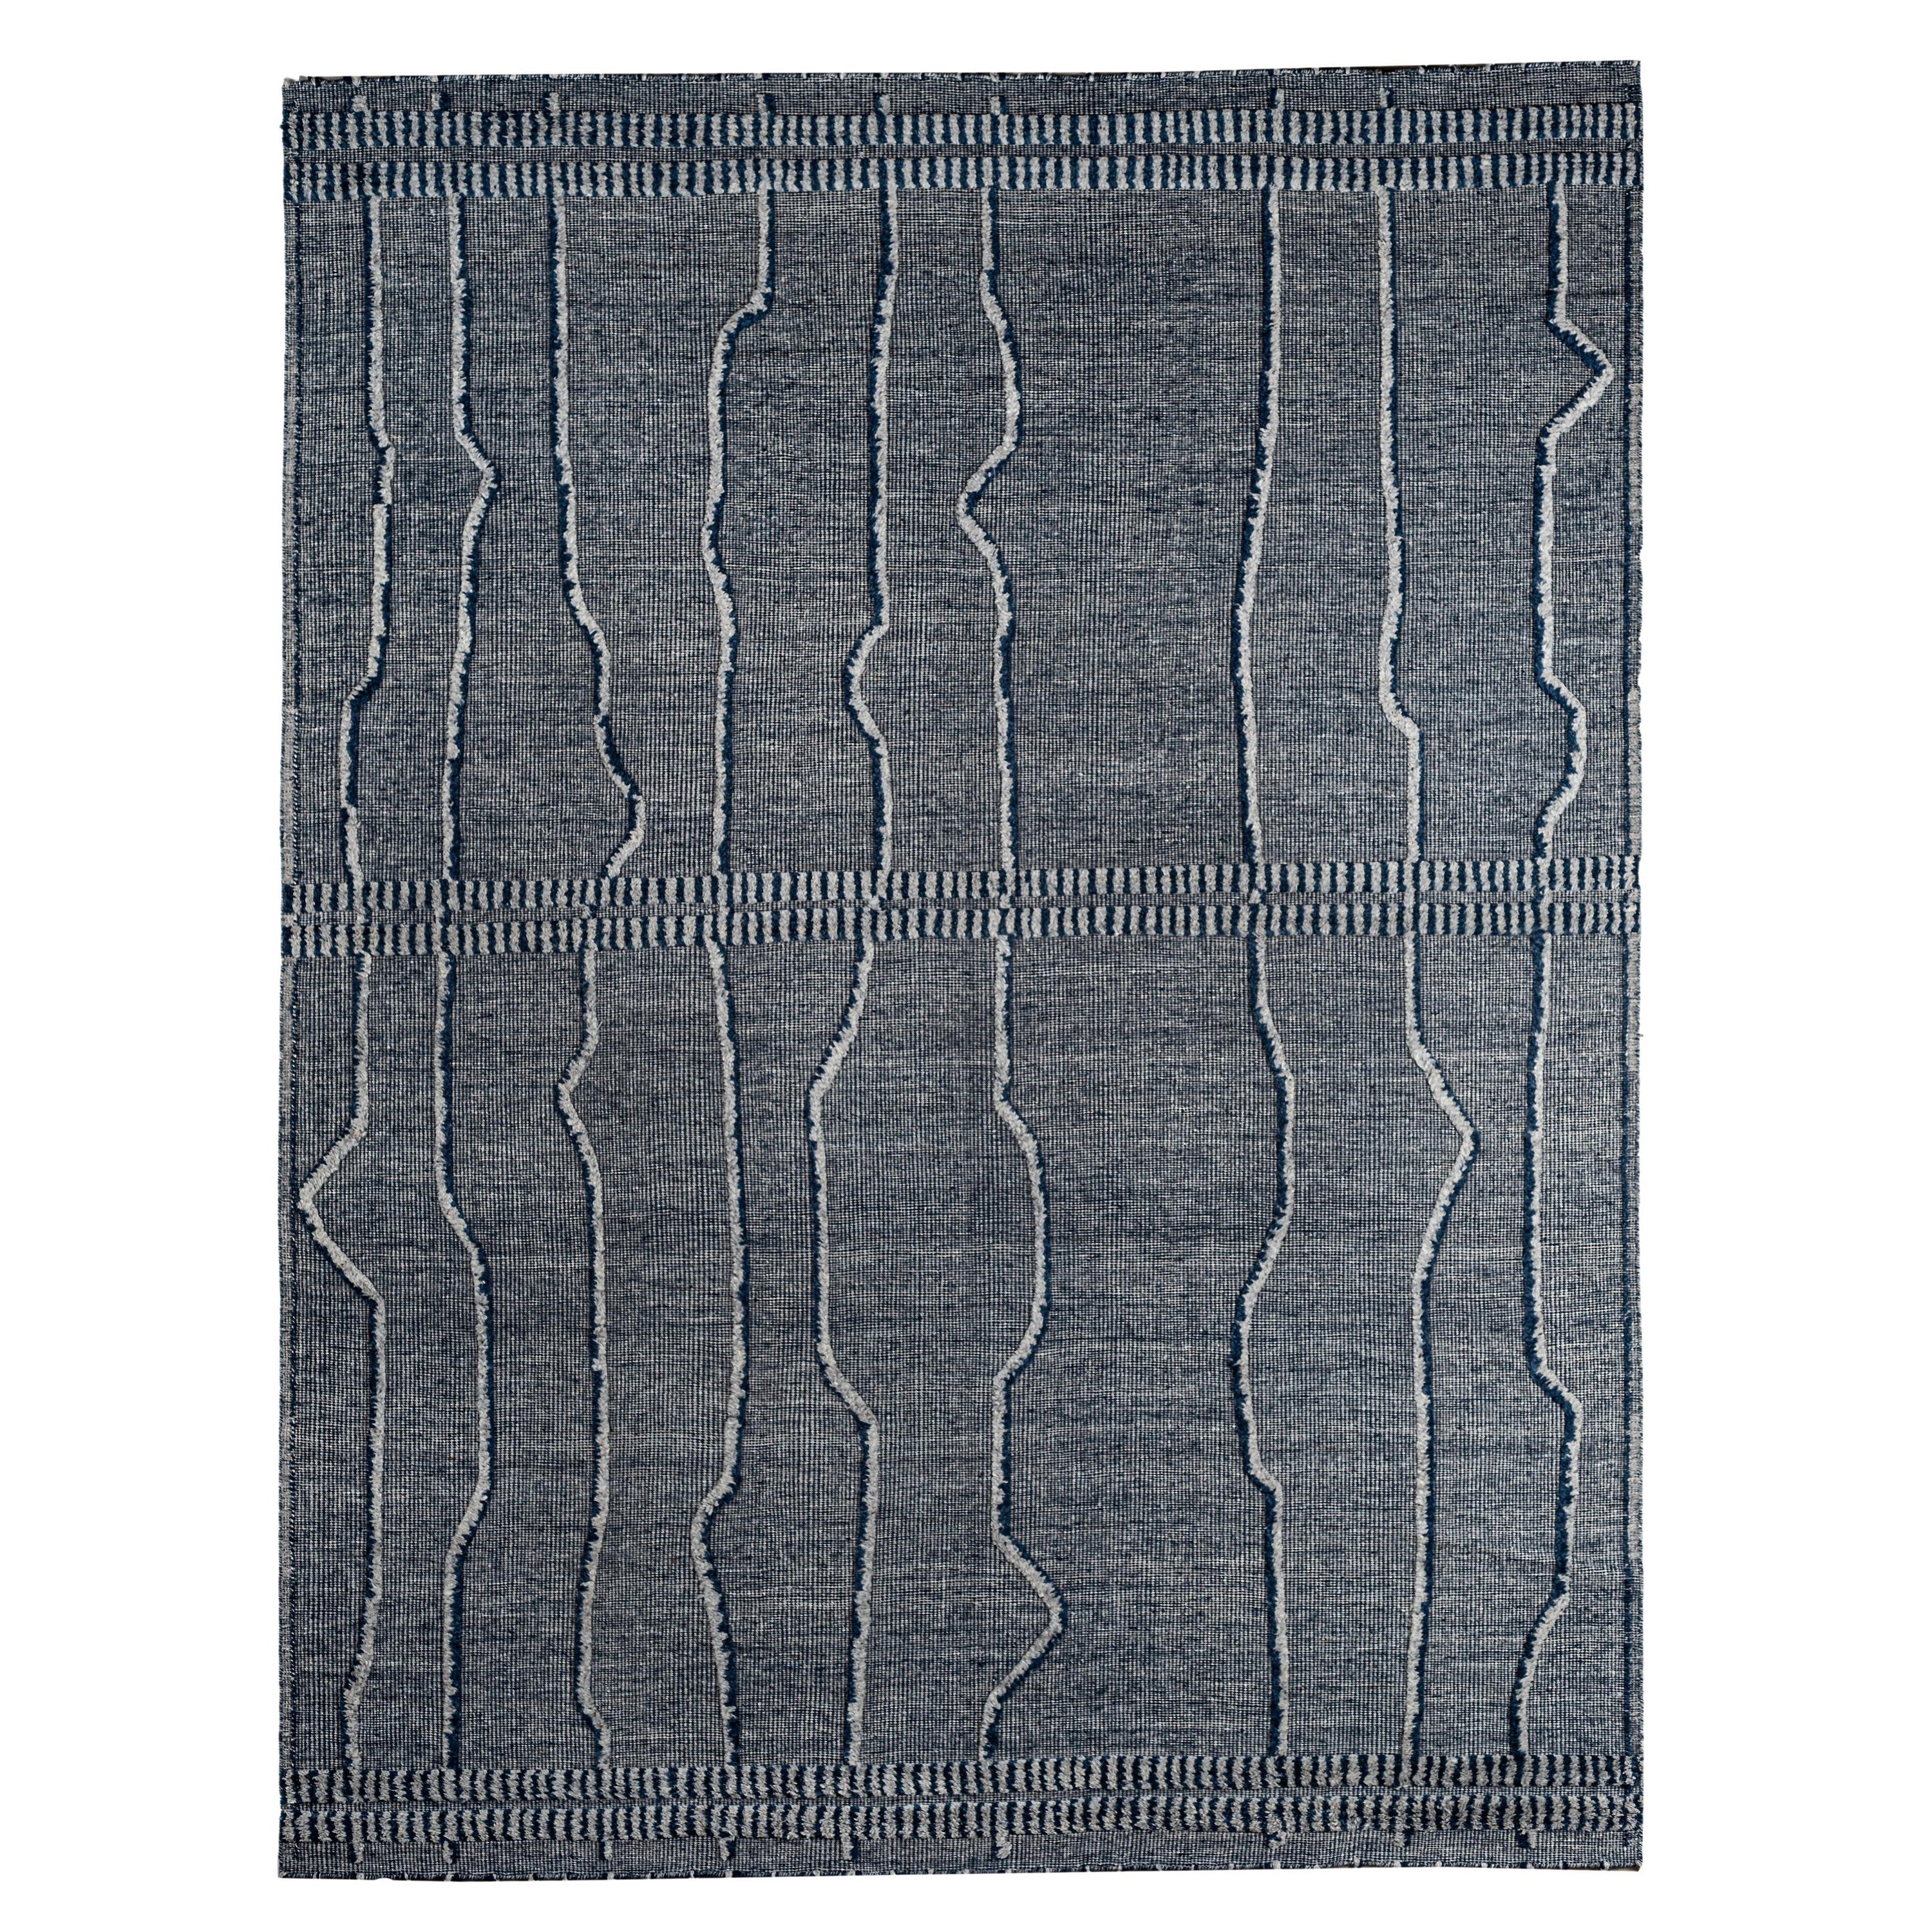 Light Grey & Navy Blue Striped Moroccan Design Area Rug For Sale